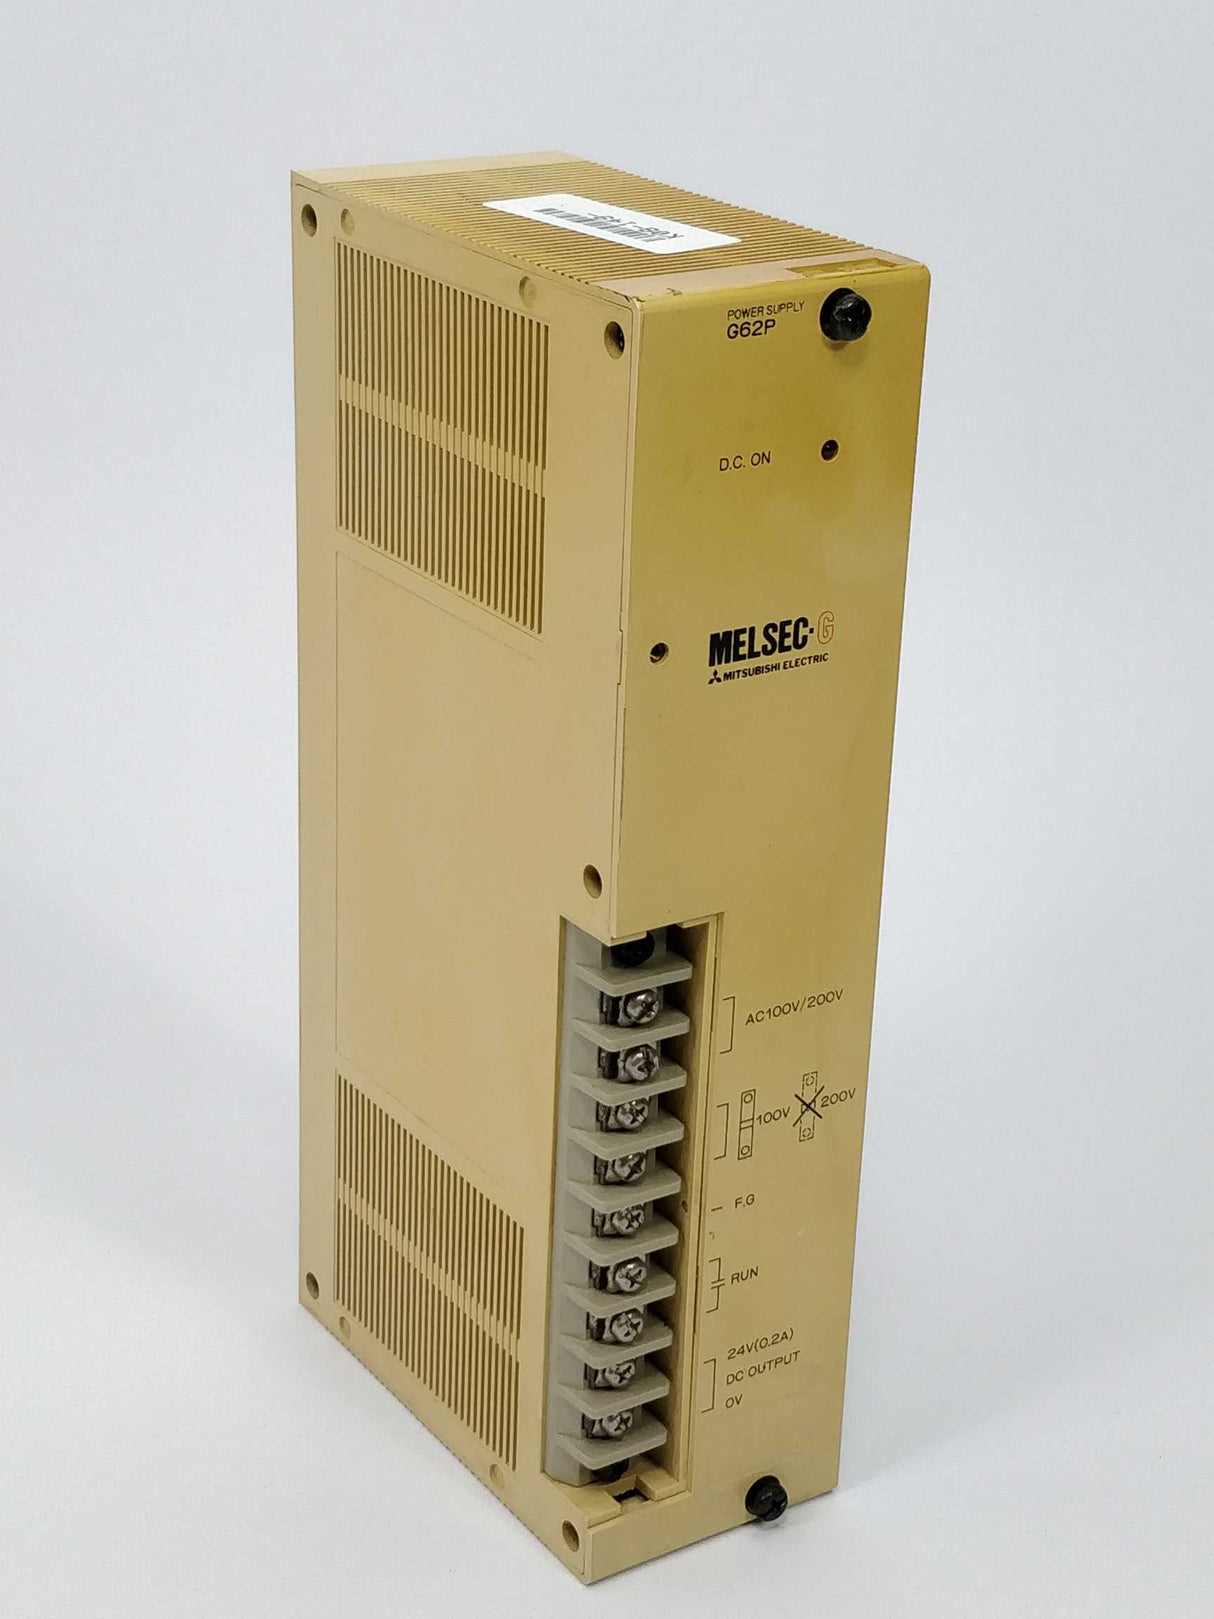 Mitsubishi G62P MELSEC-G Power Supply 670217